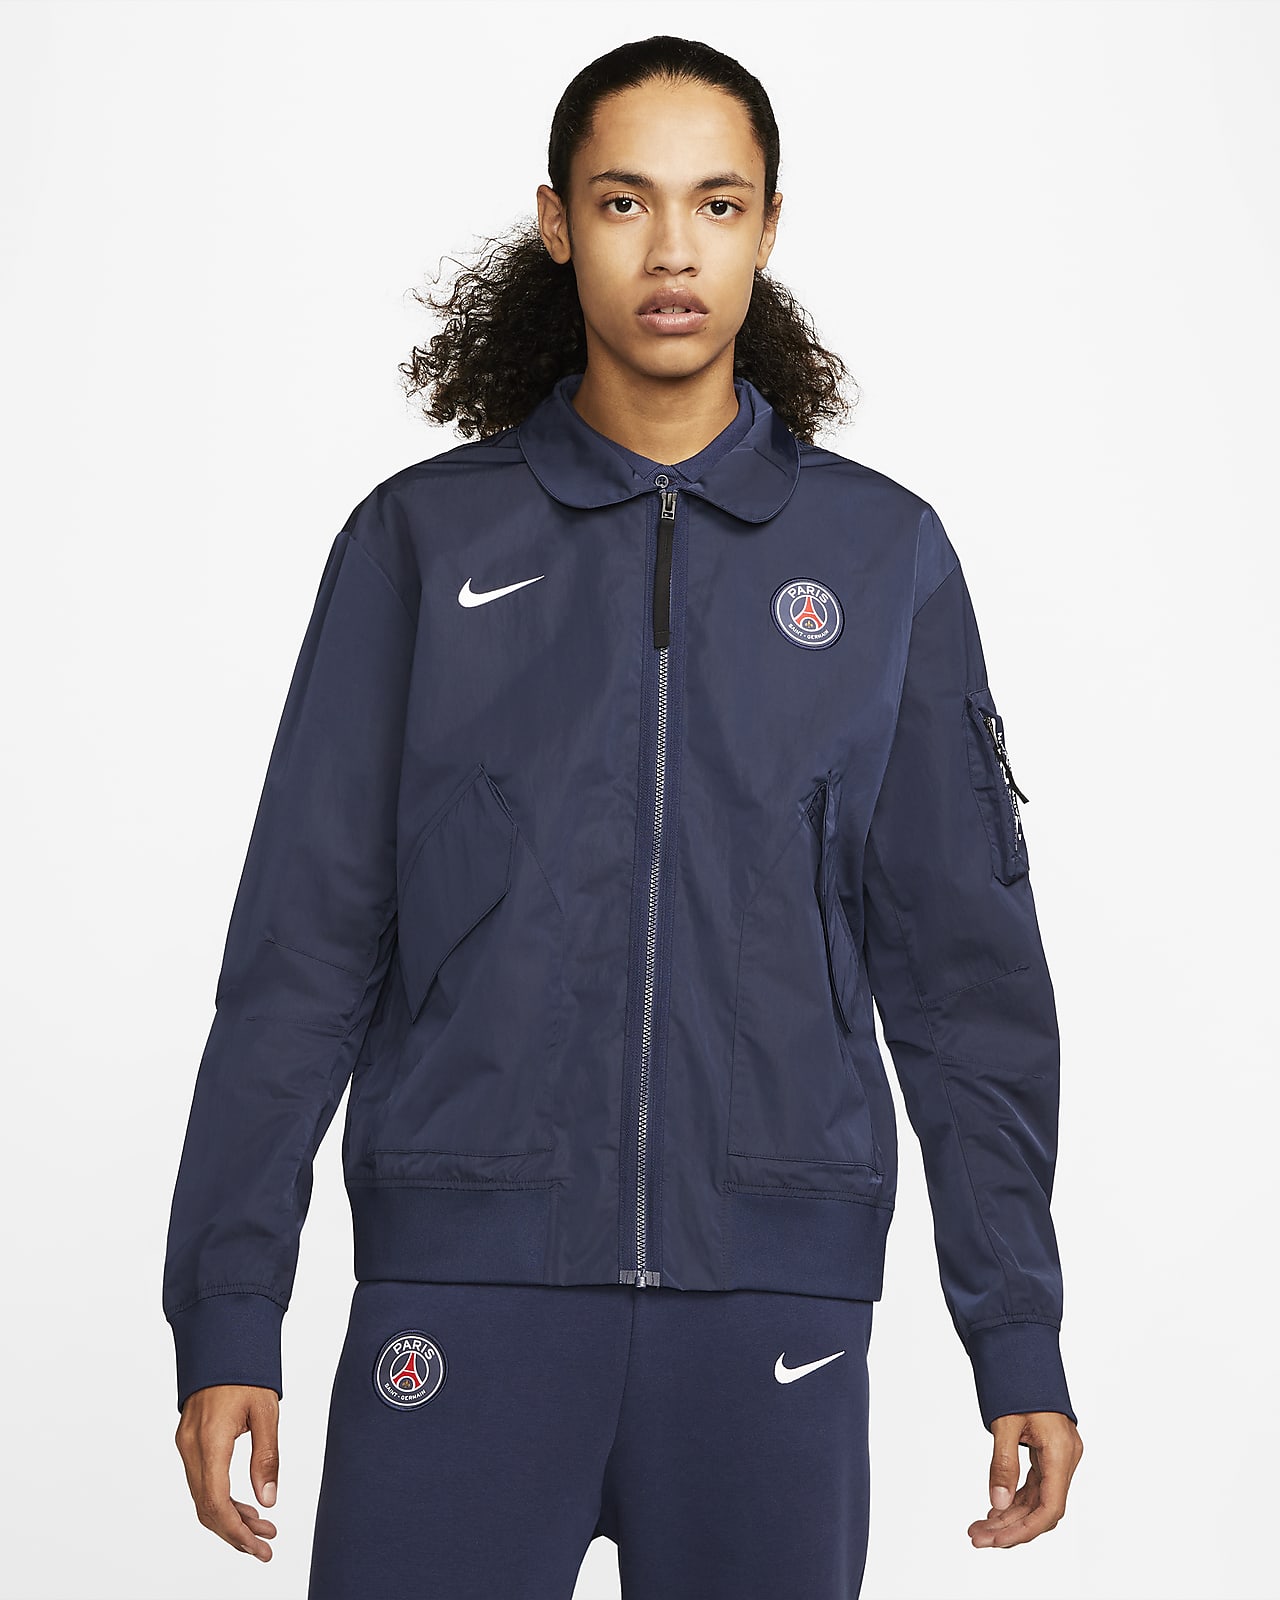 Chamarra bomber sin para hombre Paris Saint-Germain. Nike.com